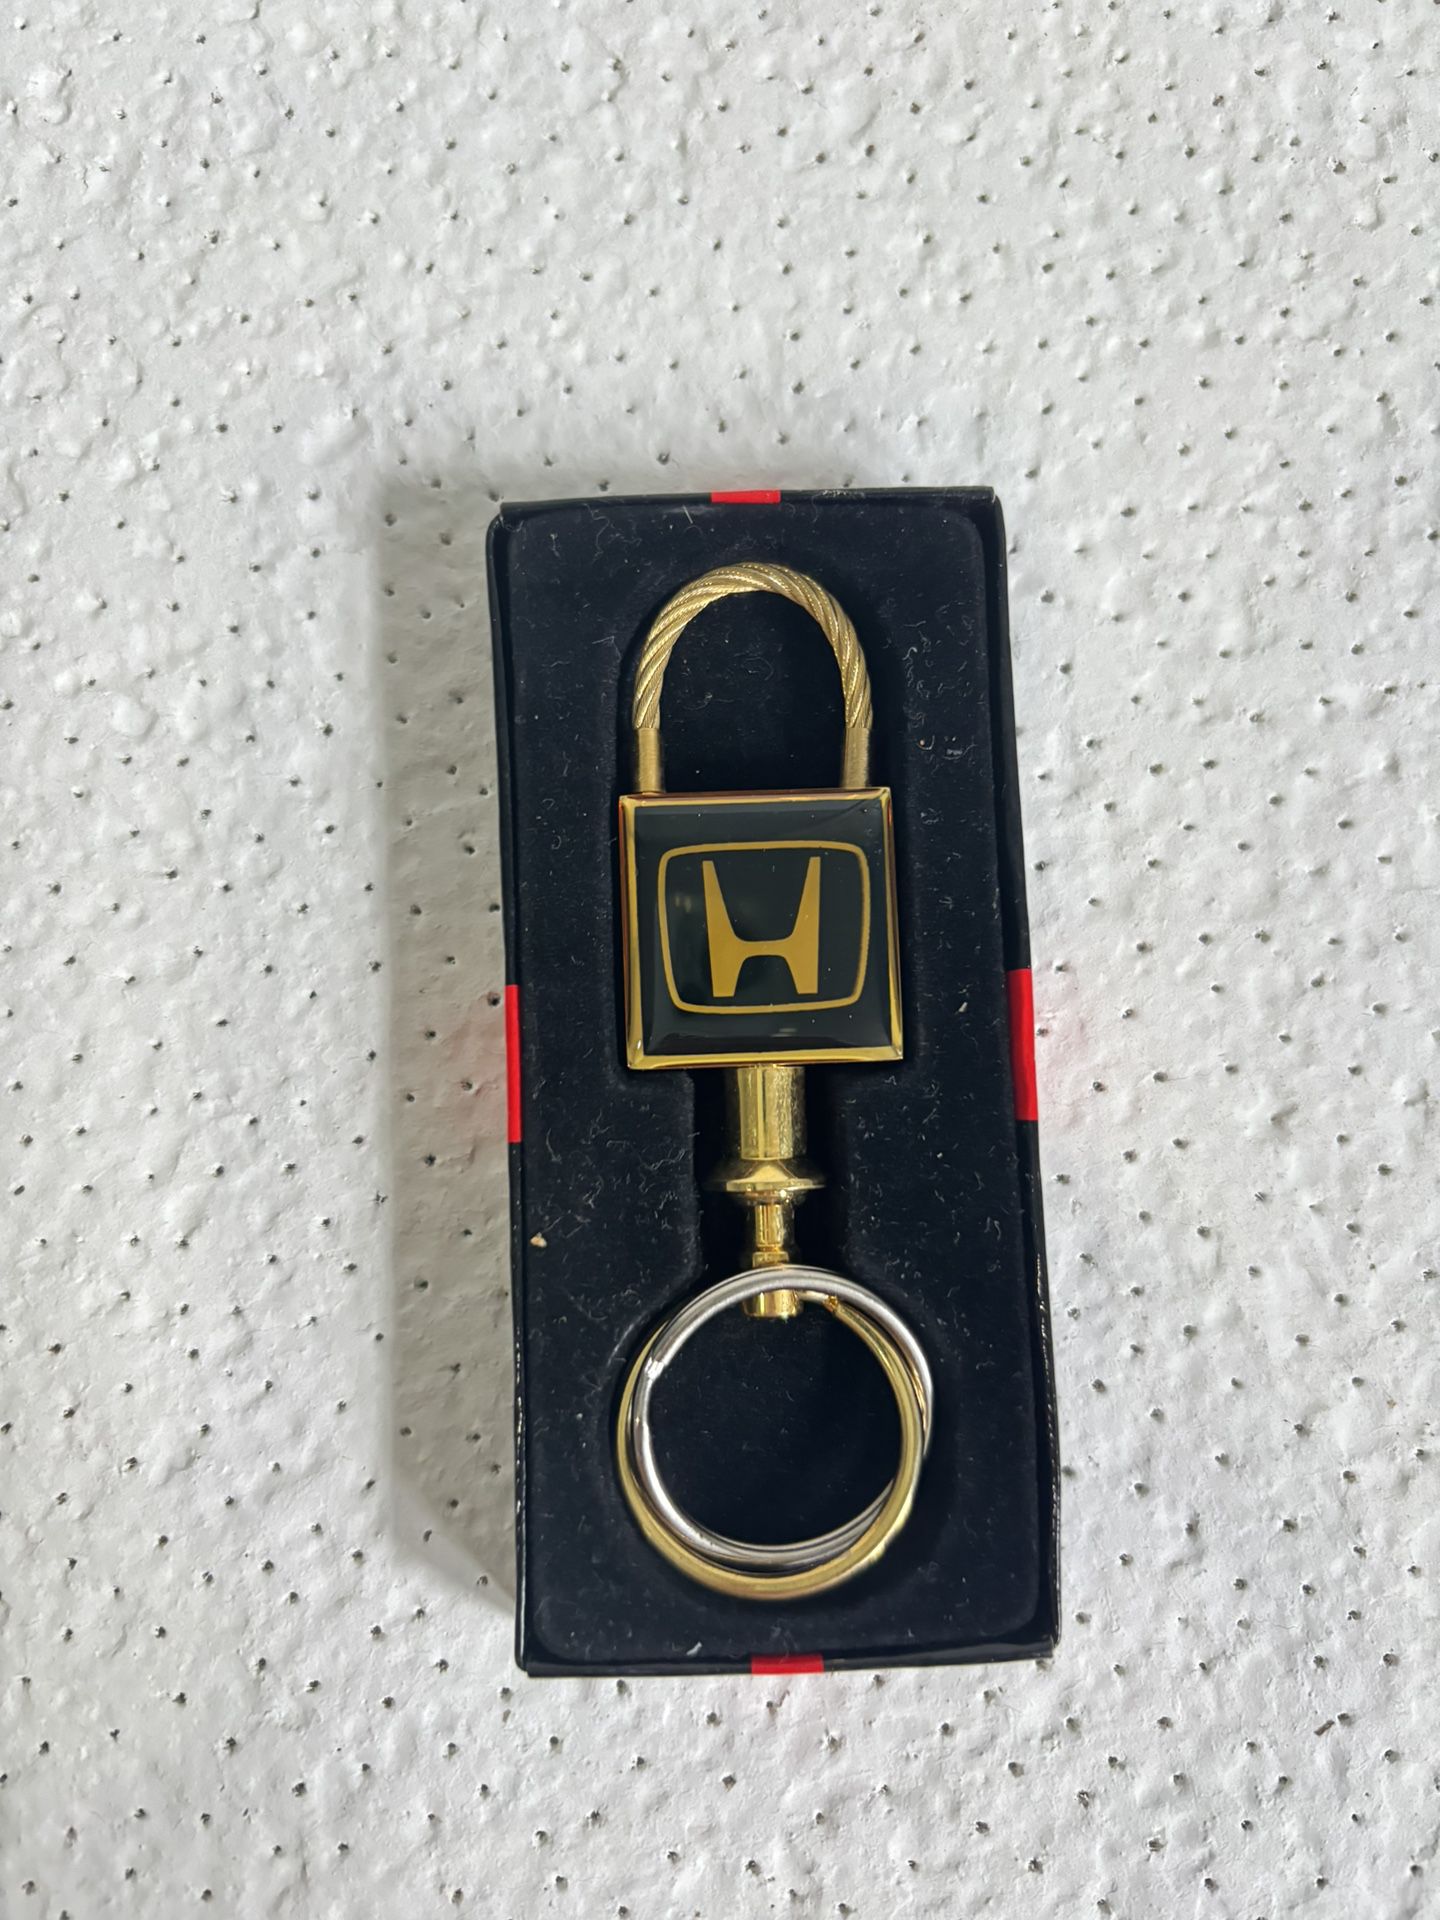 Honda key Chain 1997 Gold